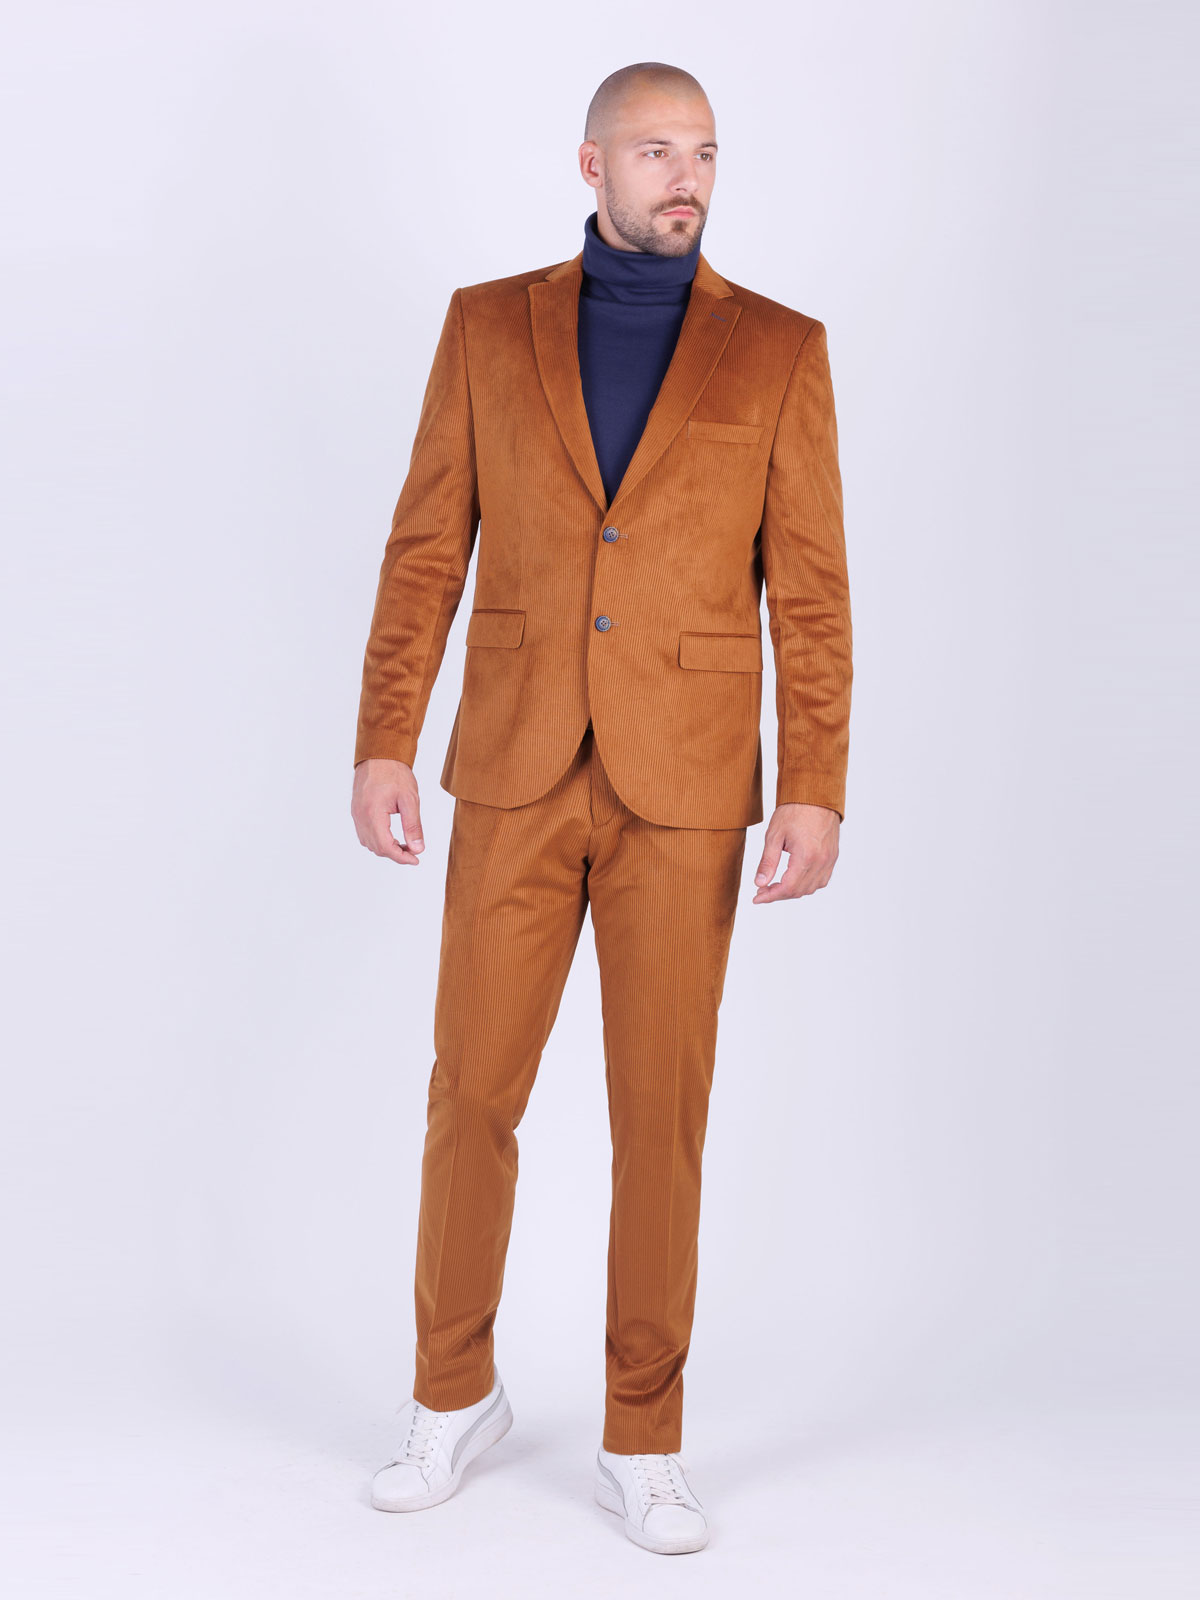 Elegant jacket in mustard color - 61100 € 83.80 img4